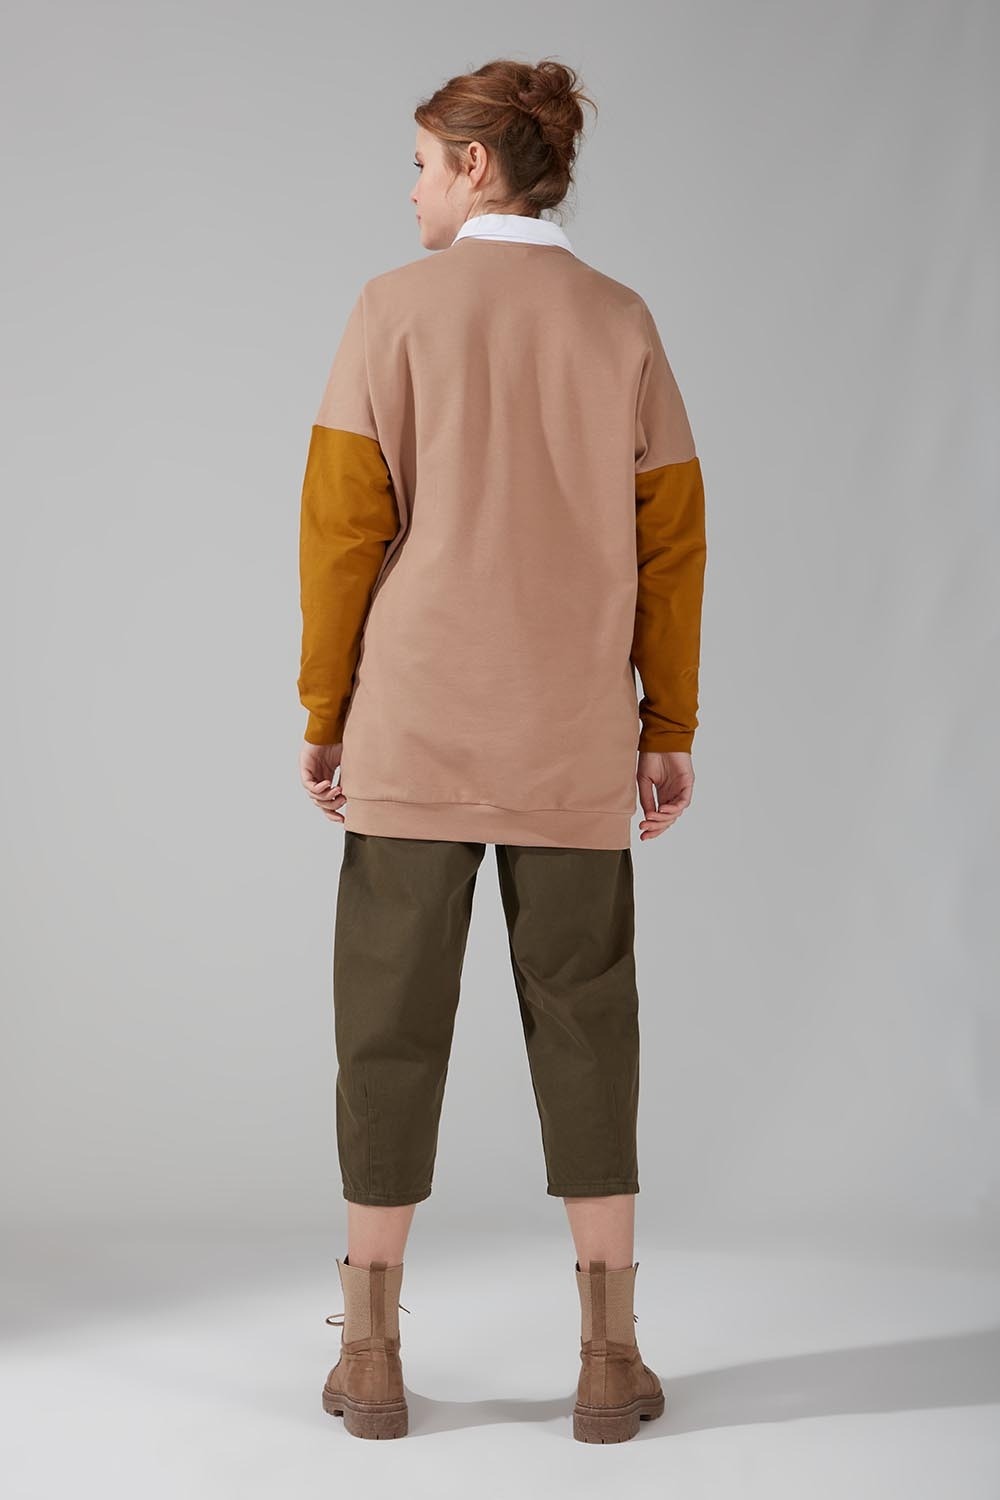 Colorful Sweatshirt (Beige)